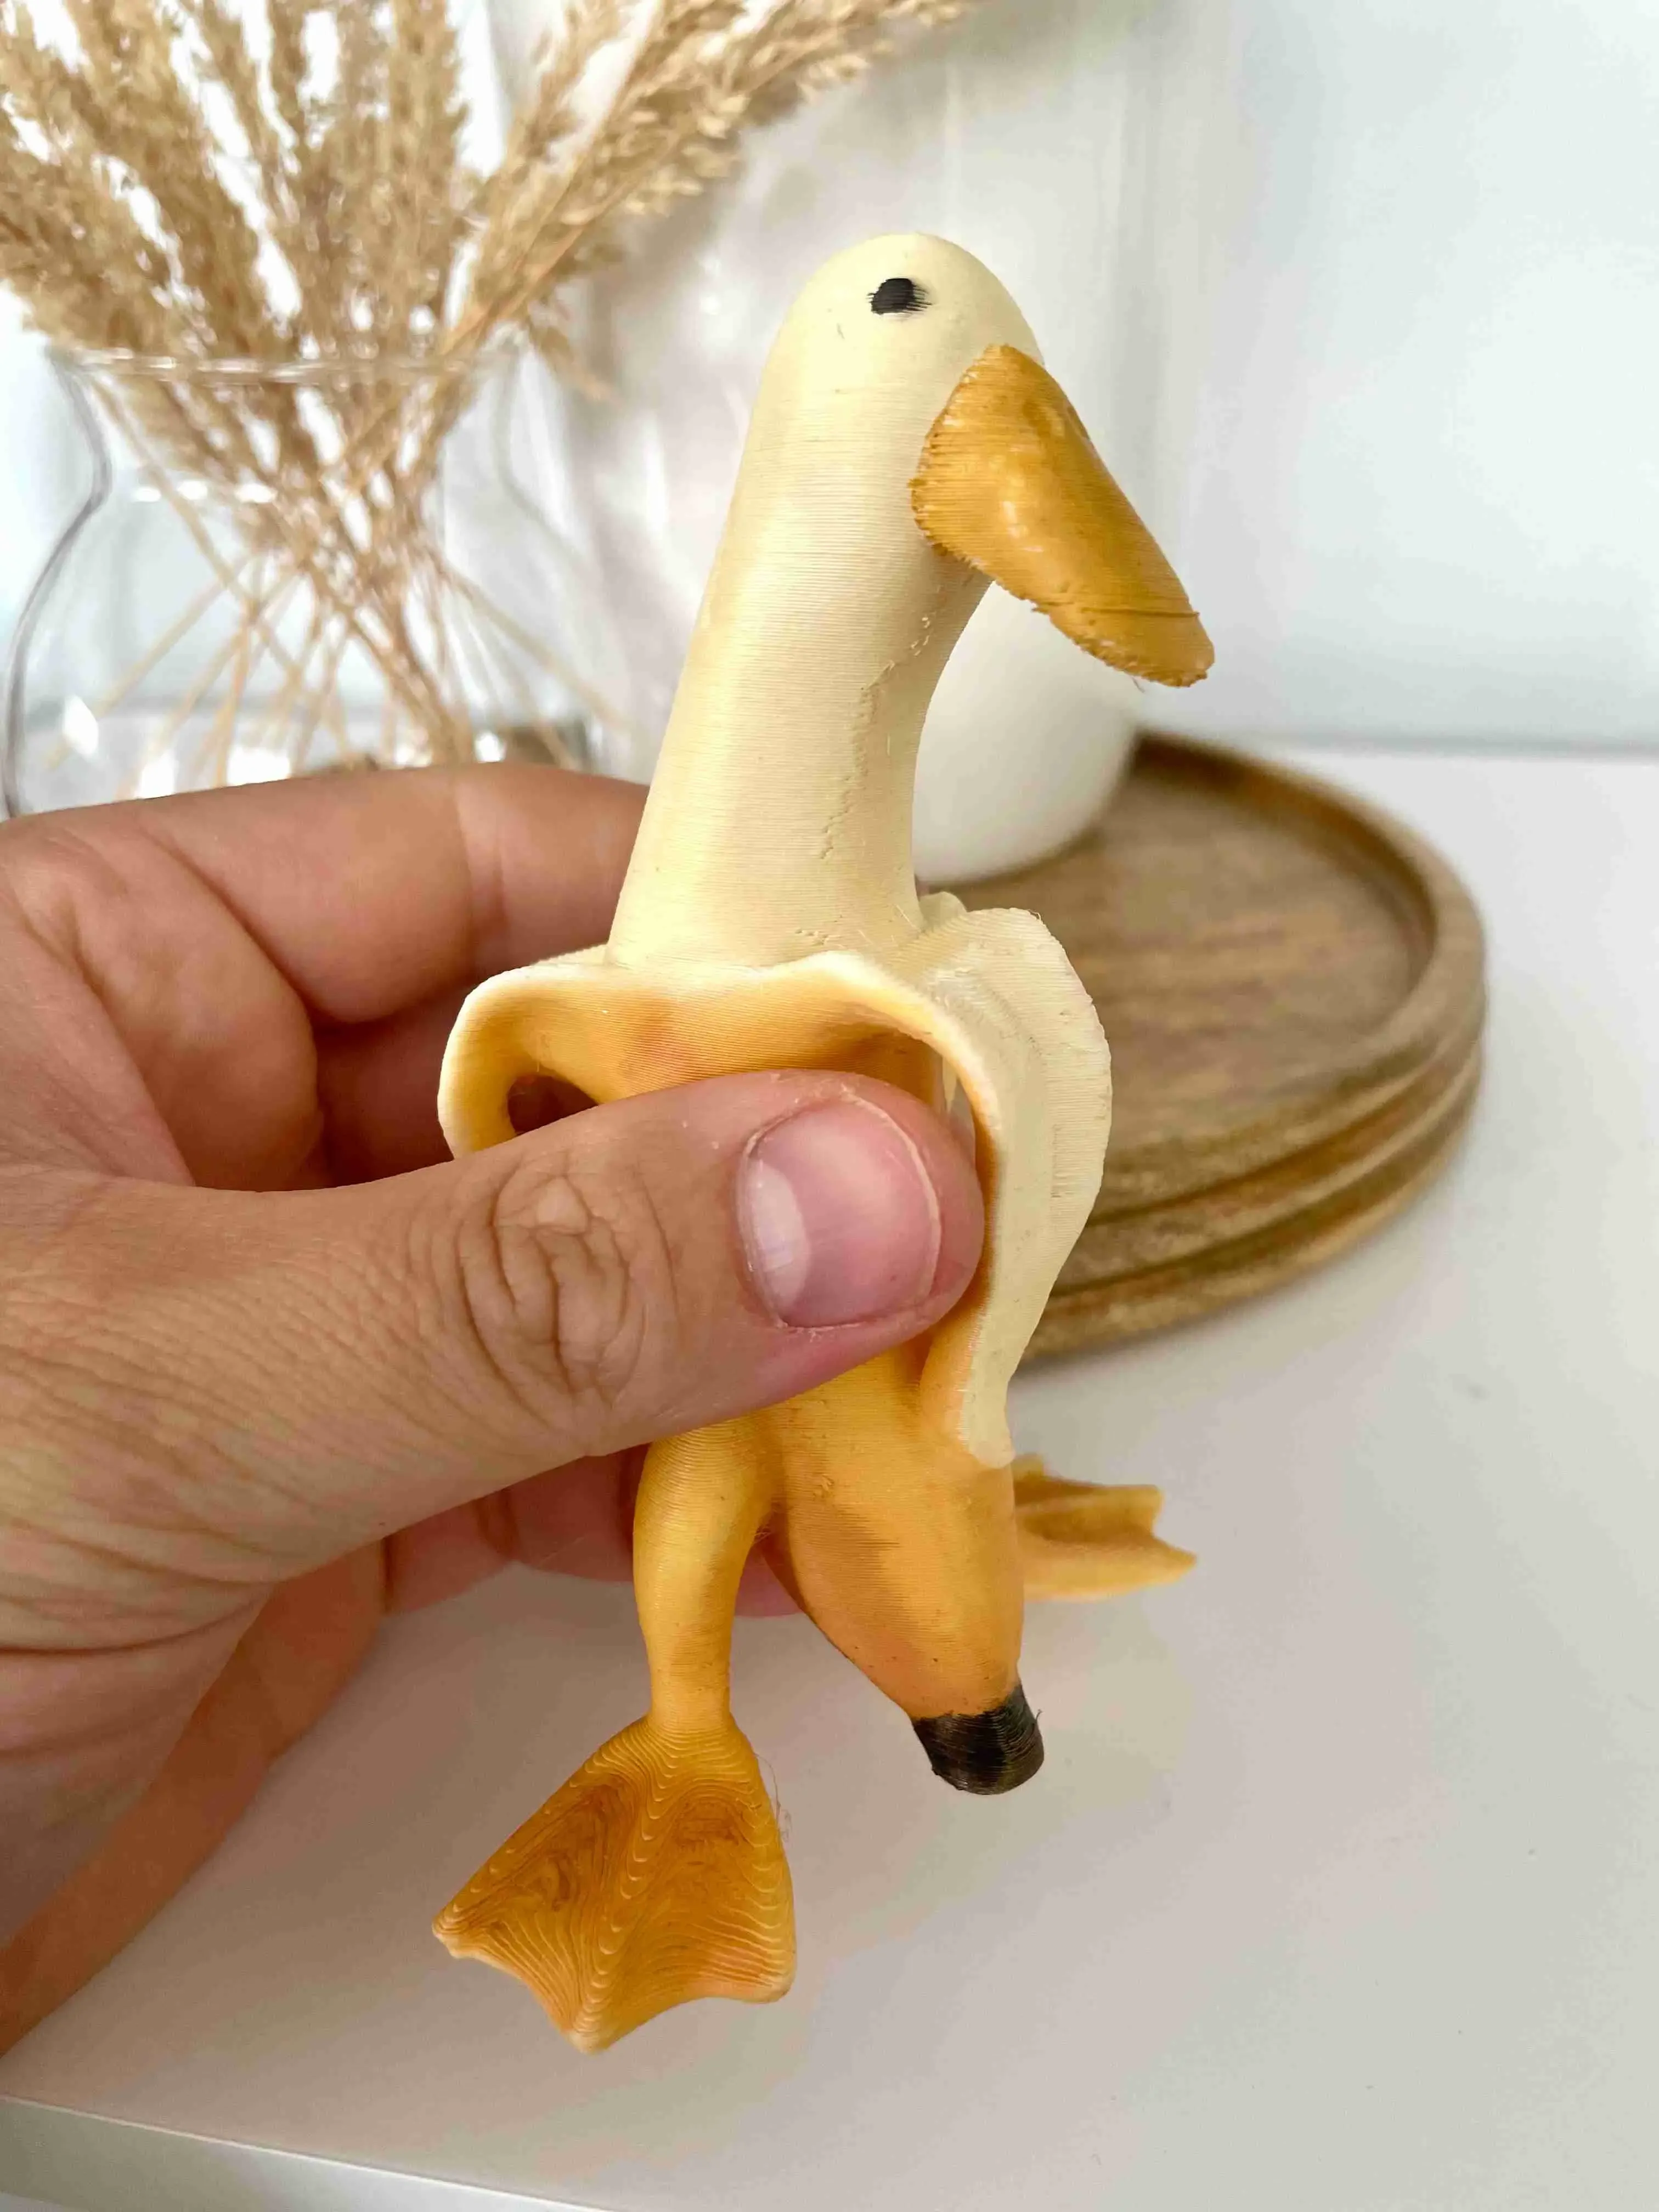 Bananaduck - Half Banana half duck!